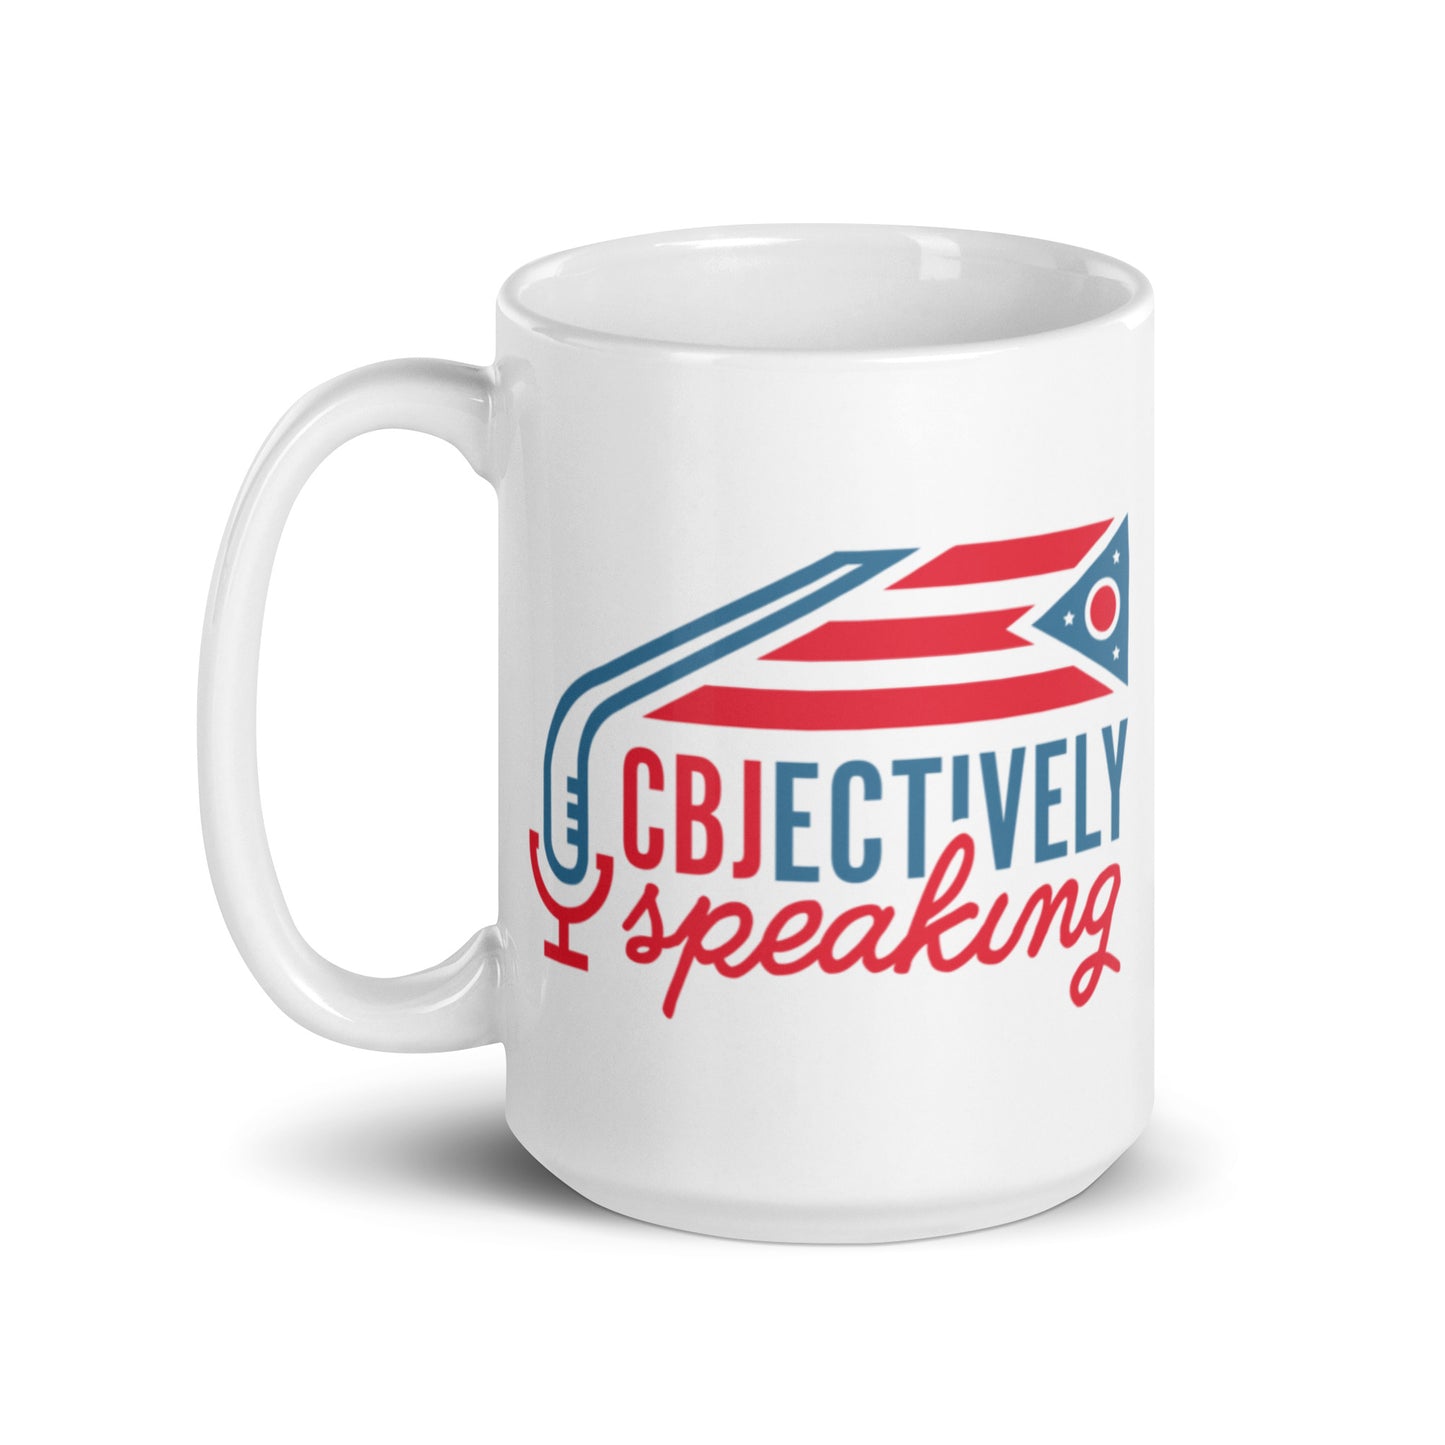 CBJectively Speaking White glossy mug